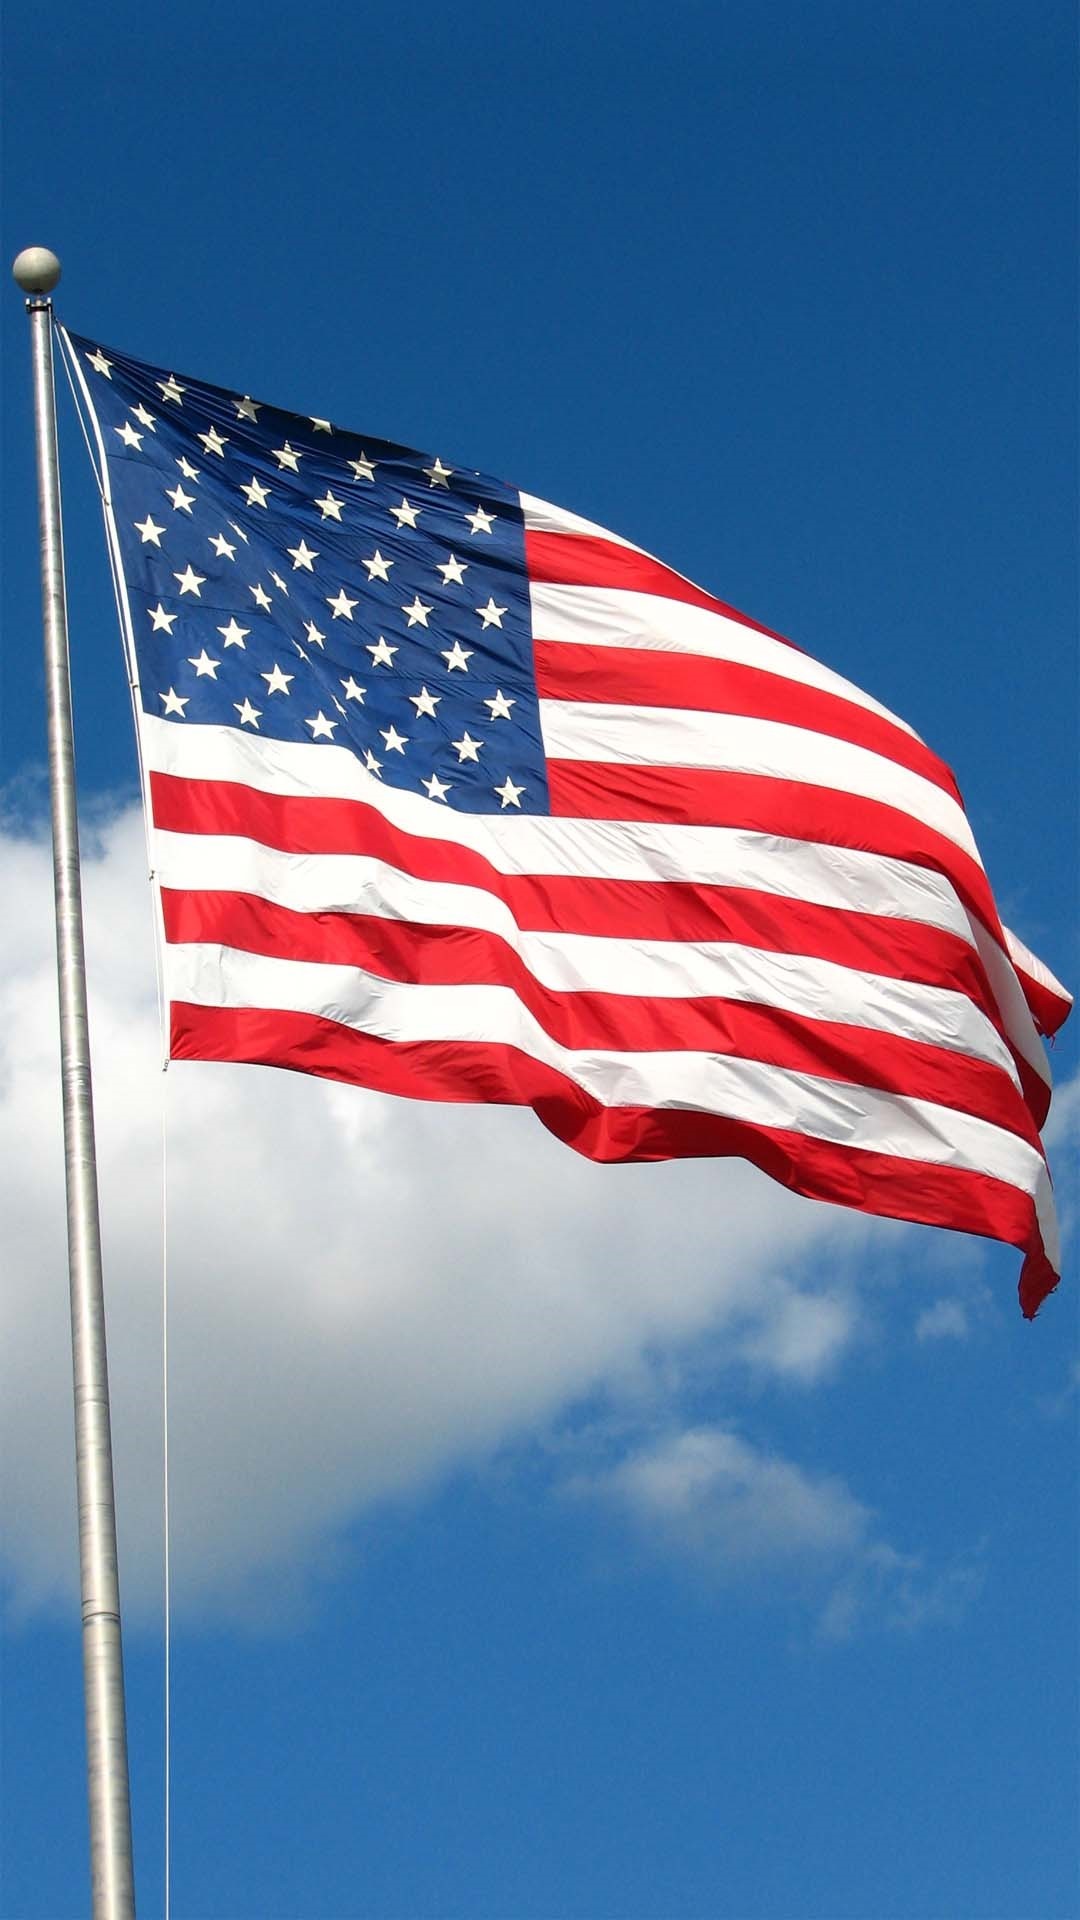 1080x1920 American Flag Iphone Wallpaper american flag iphone wallpaper7 ...